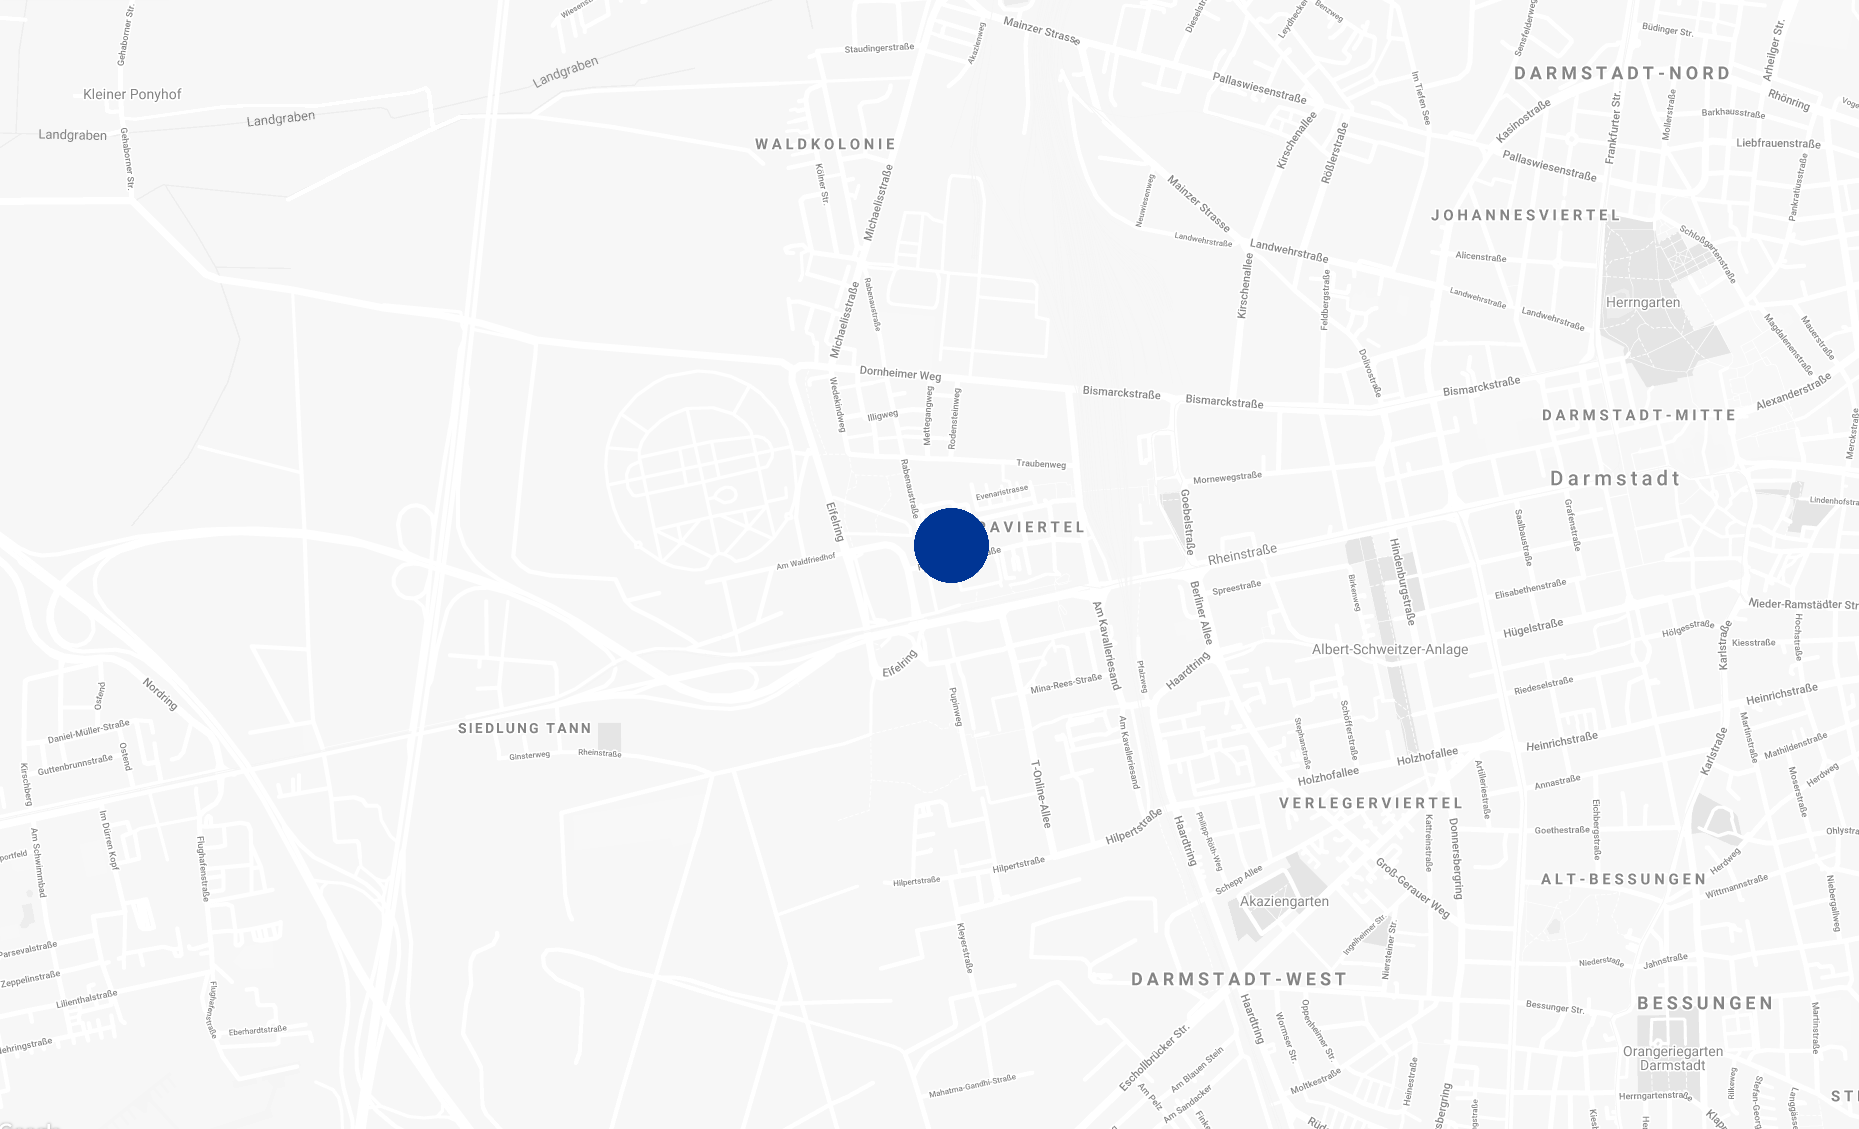 Project Location Darmstadt